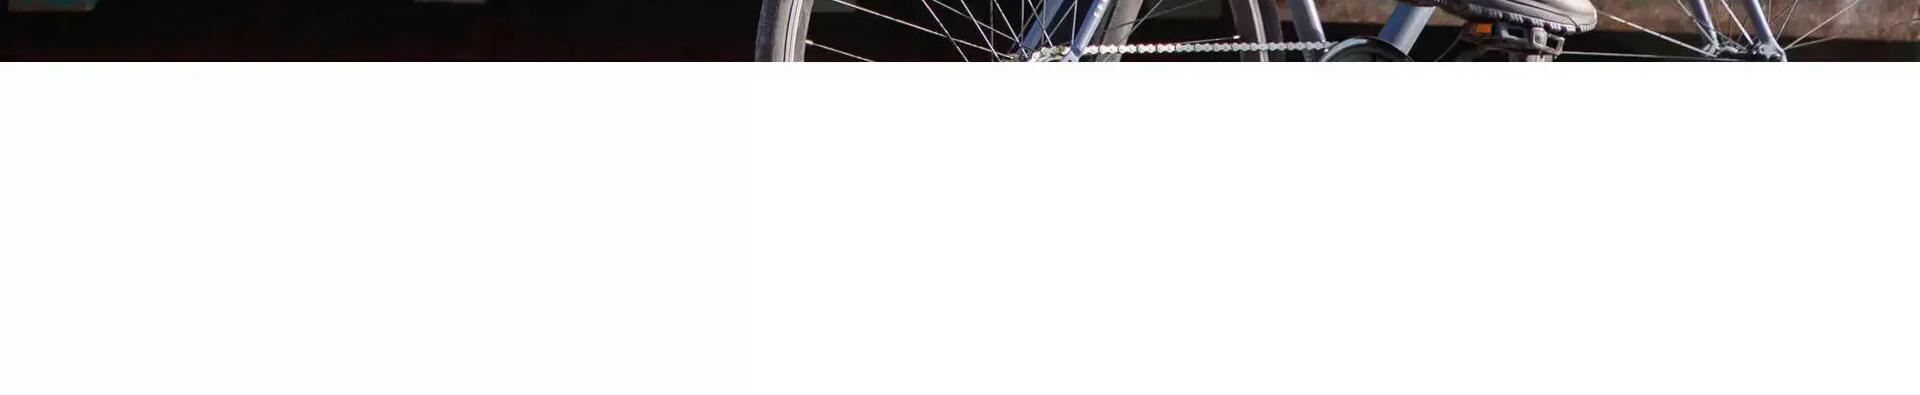 WEB_dsk,mob,tab_sadvi_int_TCI_2018_URBAN CYCLING[8500065]htc roue velo ville